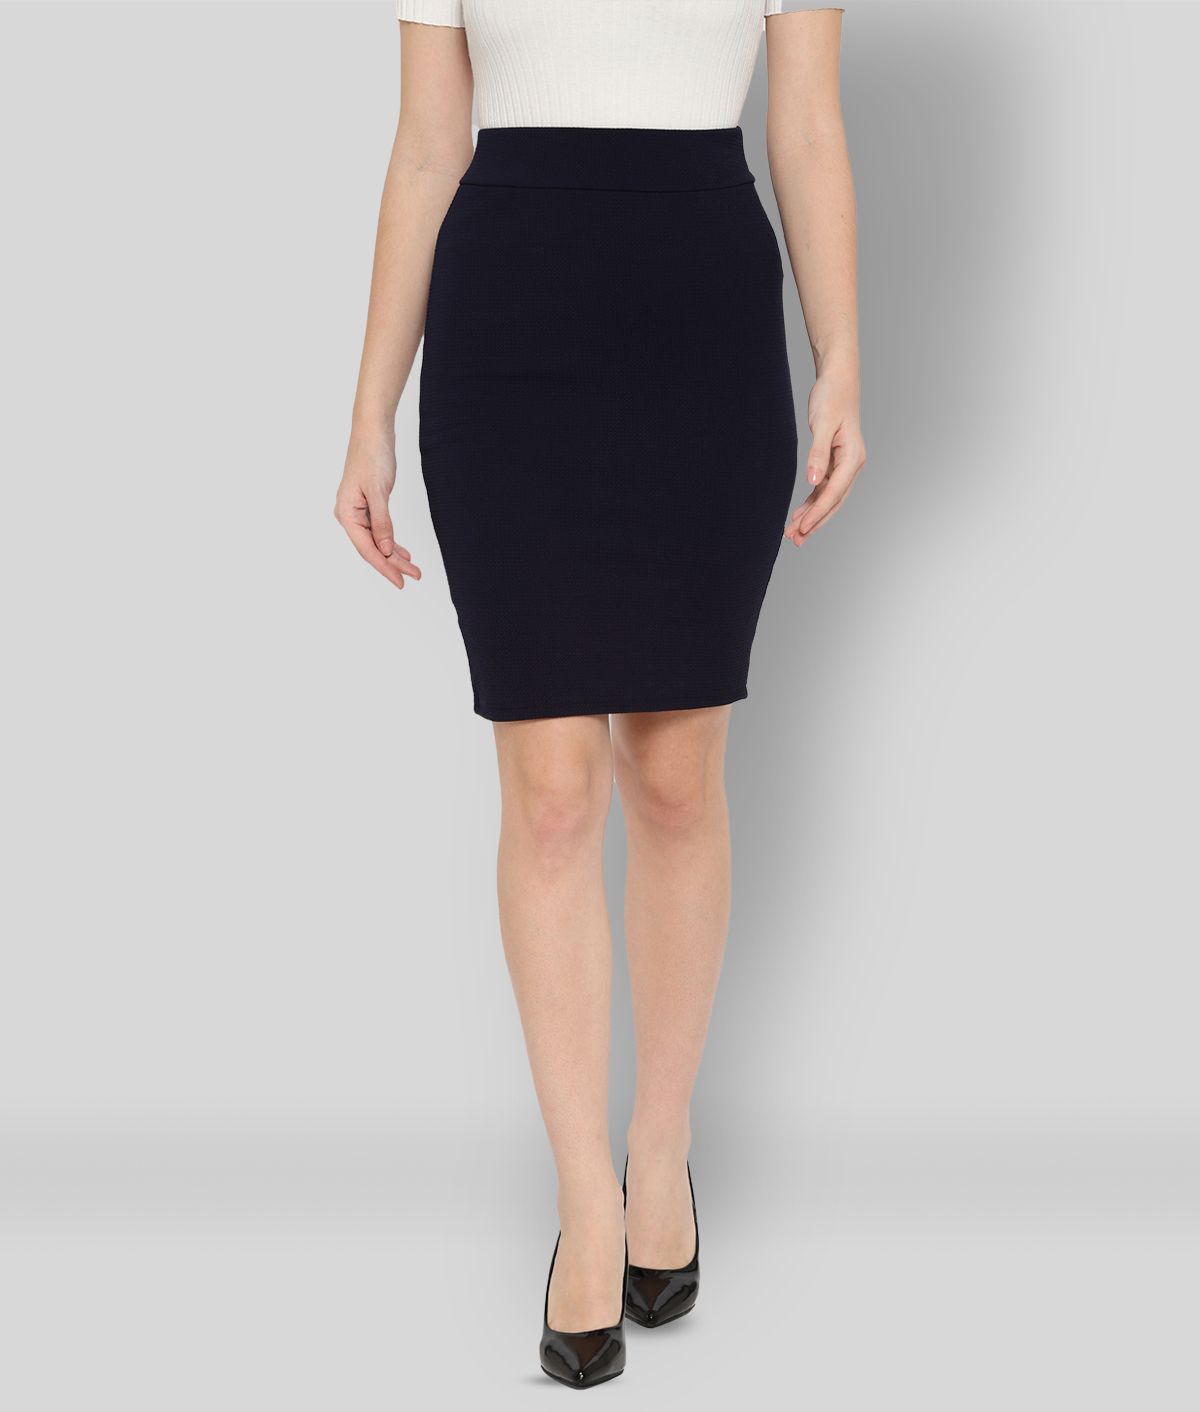 R L F - Black Cotton Blend Women's A-Line Skirt ( Pack of 1 )